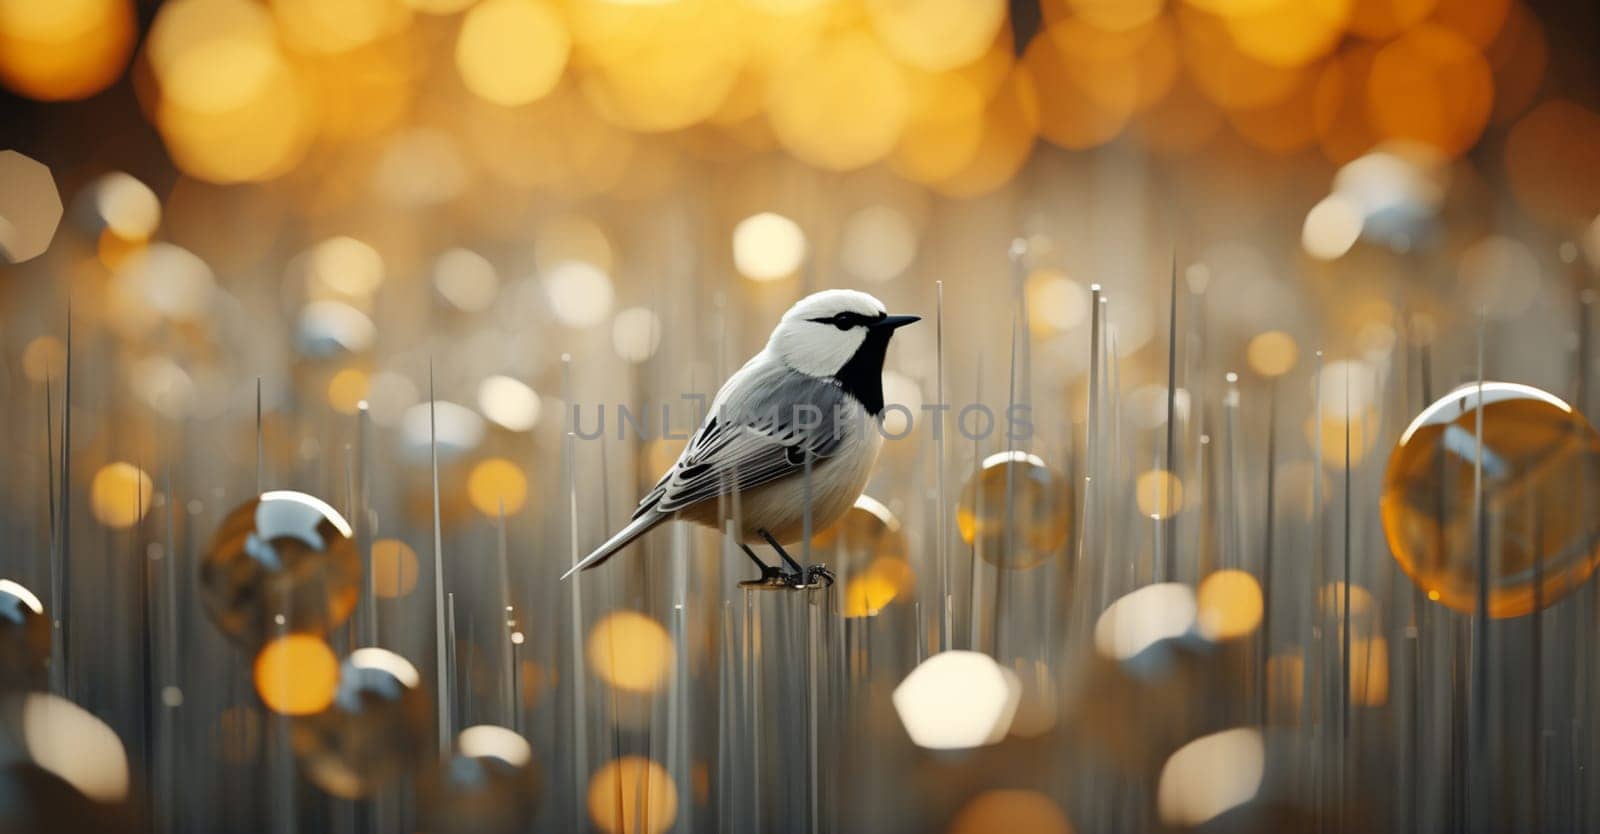 4k bird photo,4k sparrow photo,Cute bird by Andelov13